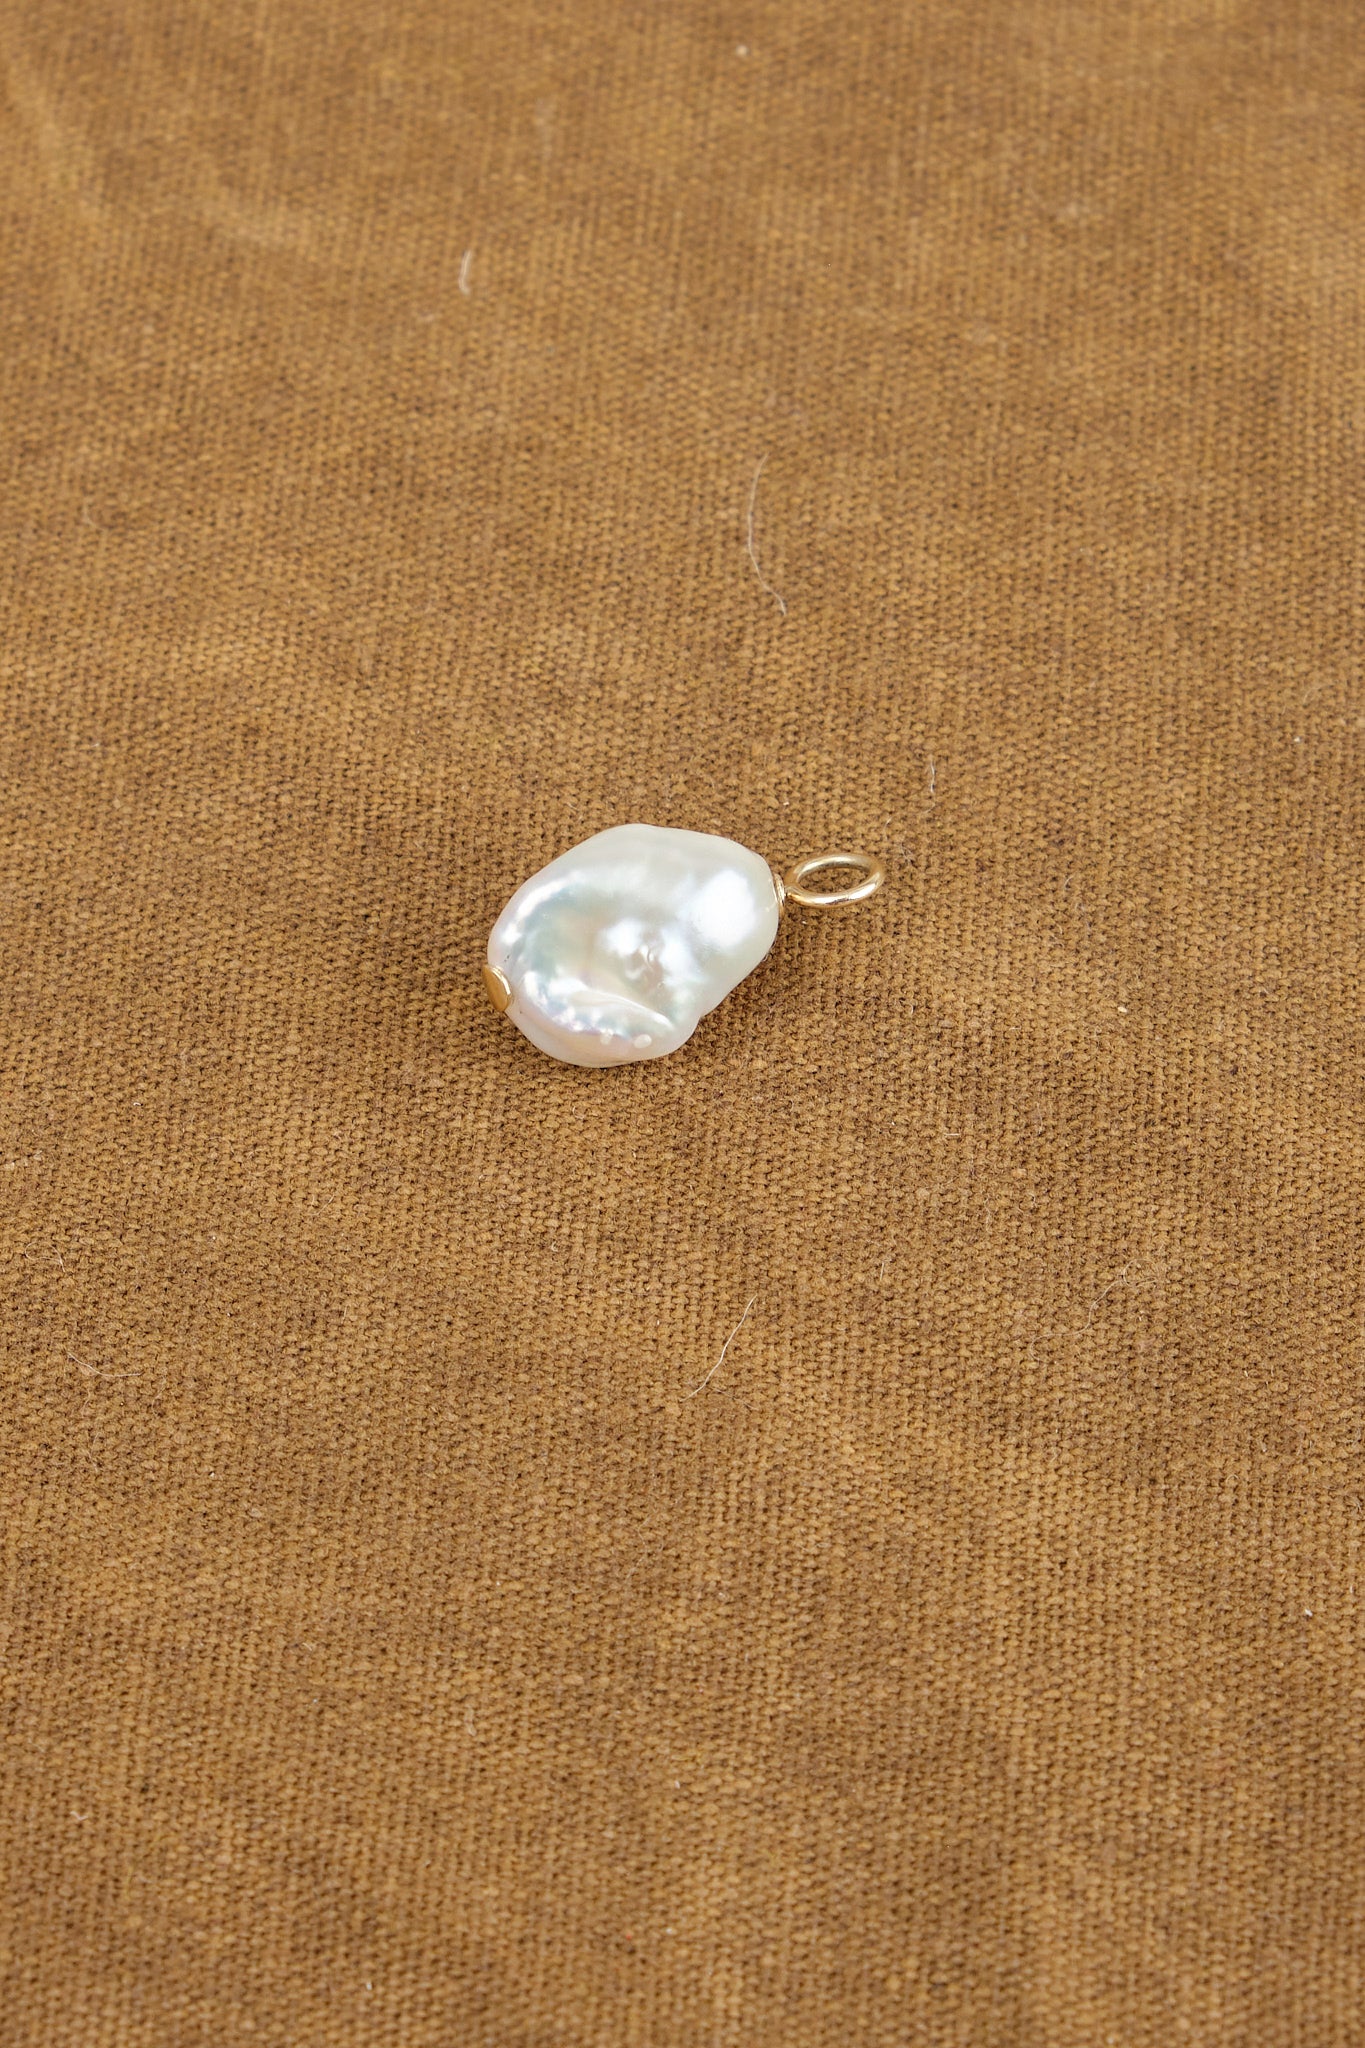 Unique pearl pendant